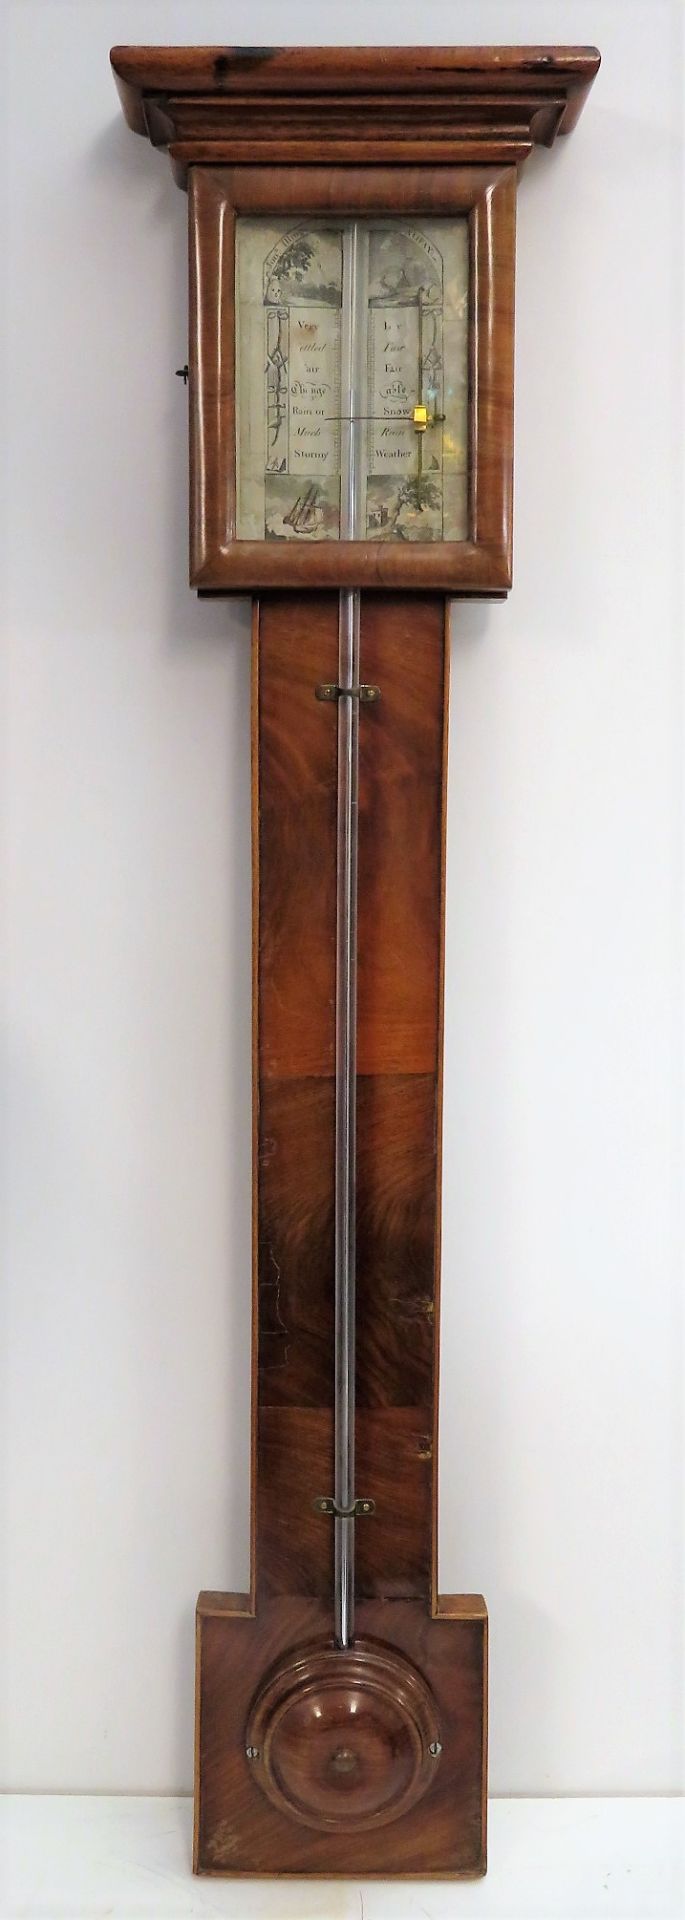 Quecksilber Barometer, John Illingworth, Yorkshire Halifax, 1790 - 1810, Gehäuse Mahagoni, intakt, 